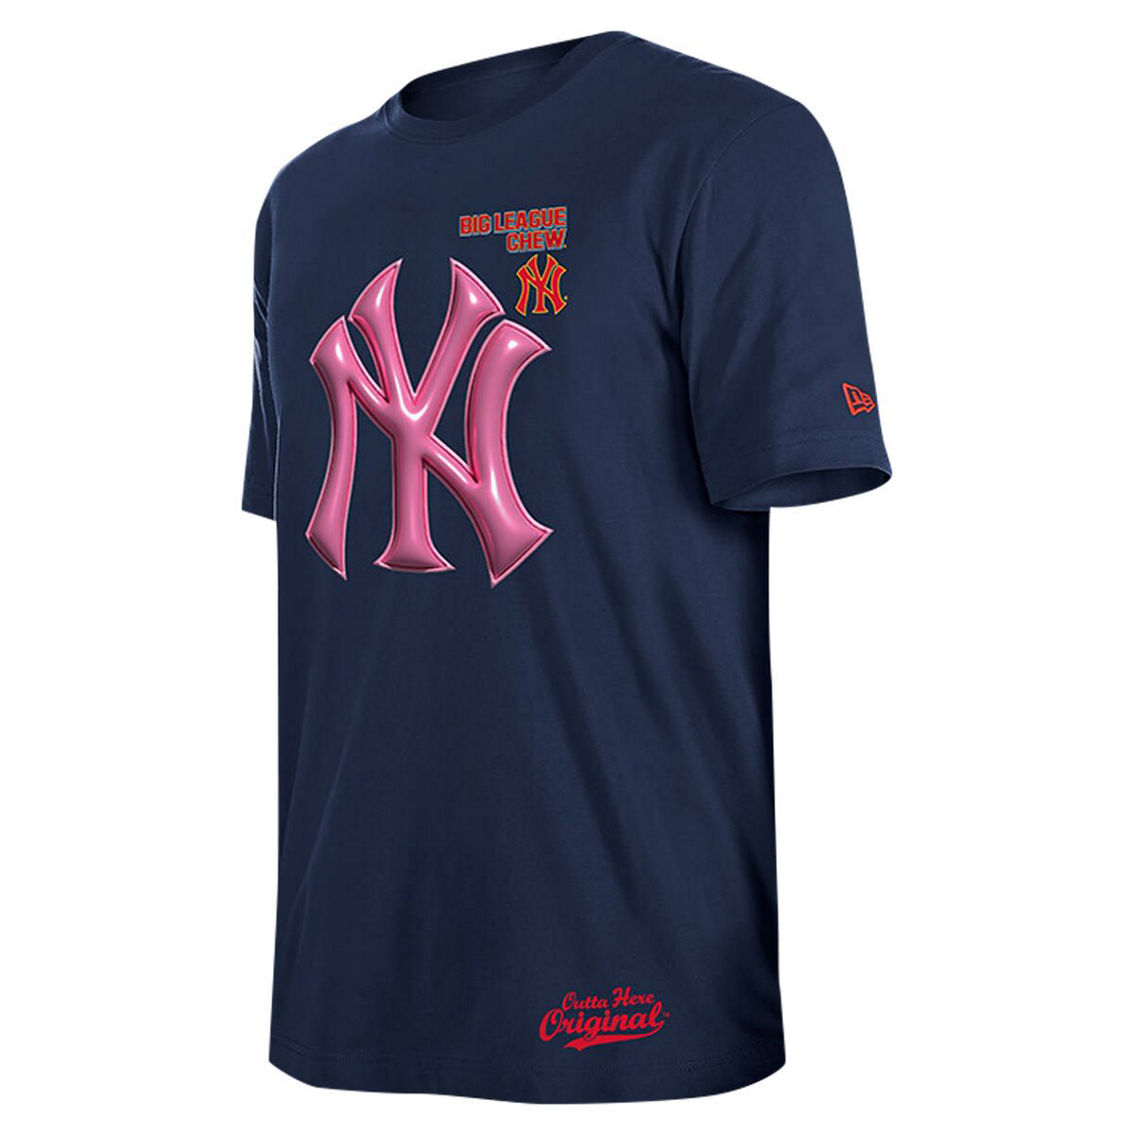 New Era Men's Navy New York Yankees Big League Chew T-Shirt - Image 3 of 4